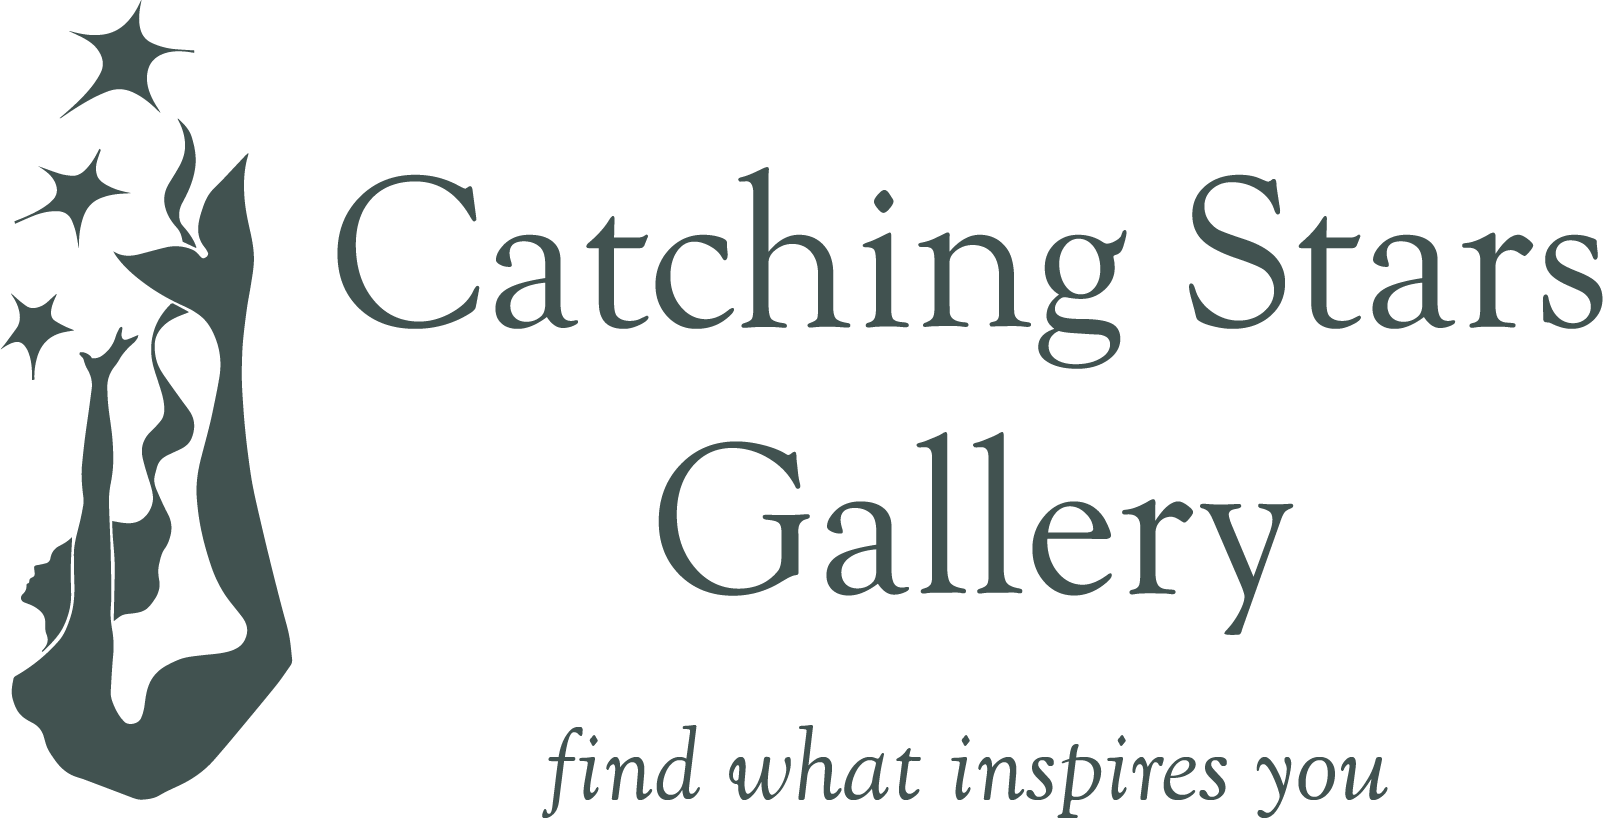 Catching Stars Gallery